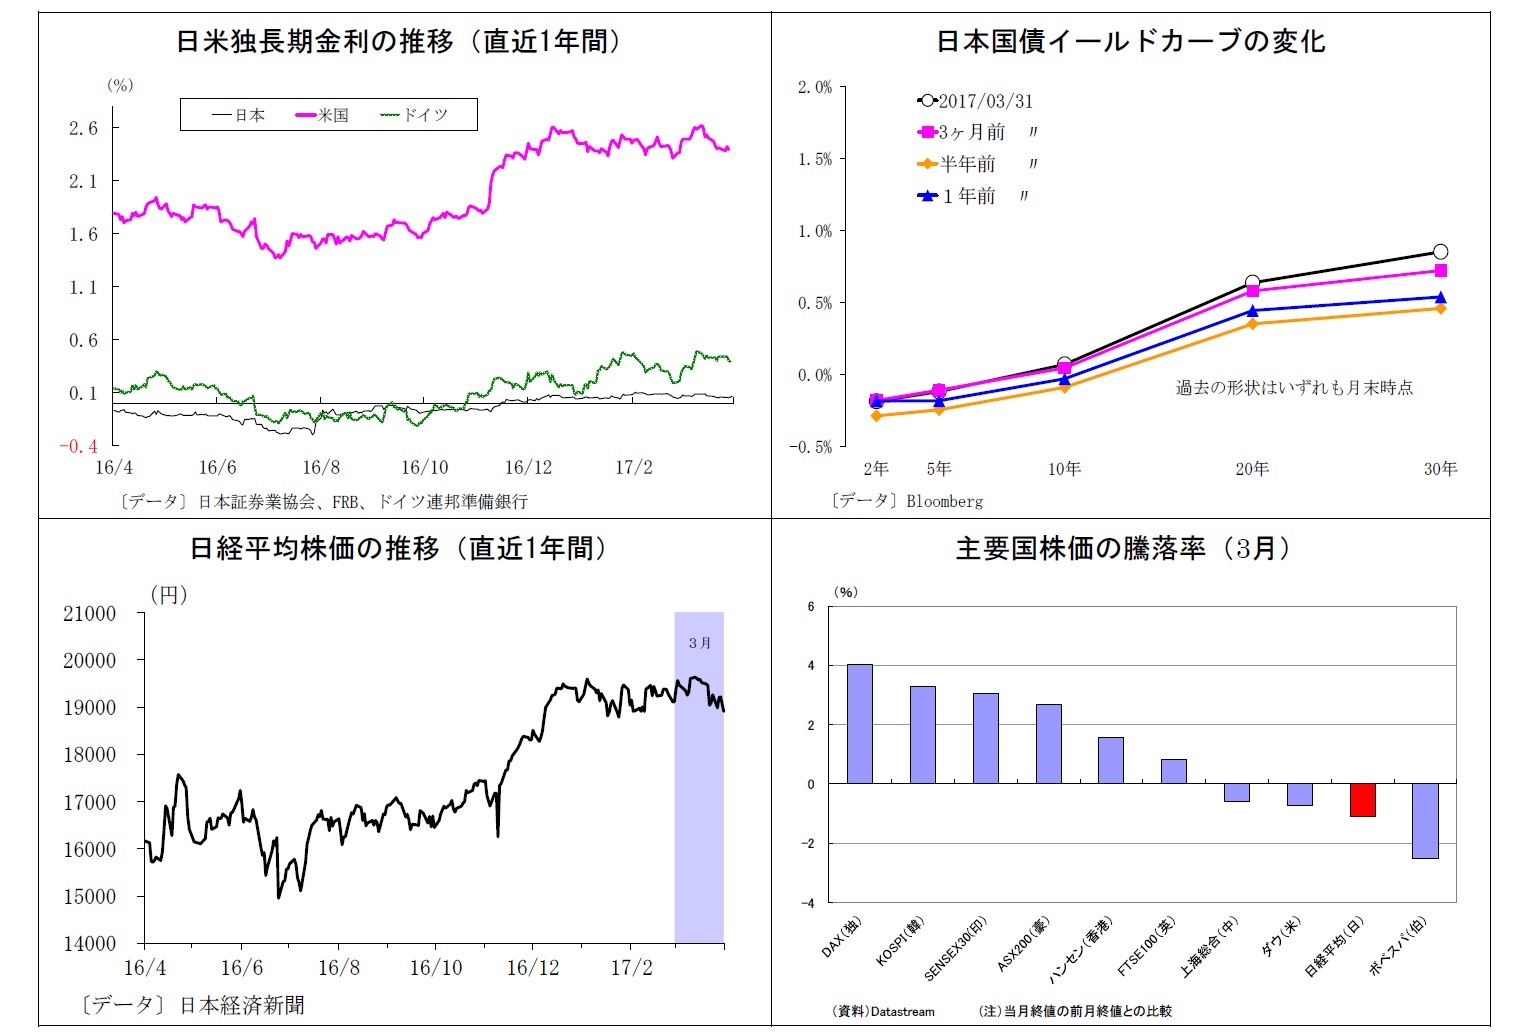 日米独長期金利の推移（直近1年間）/日本国債イールドカーブの変化/日経平均株価の推移（直近1年間）/主要国株価の騰落率（3月）